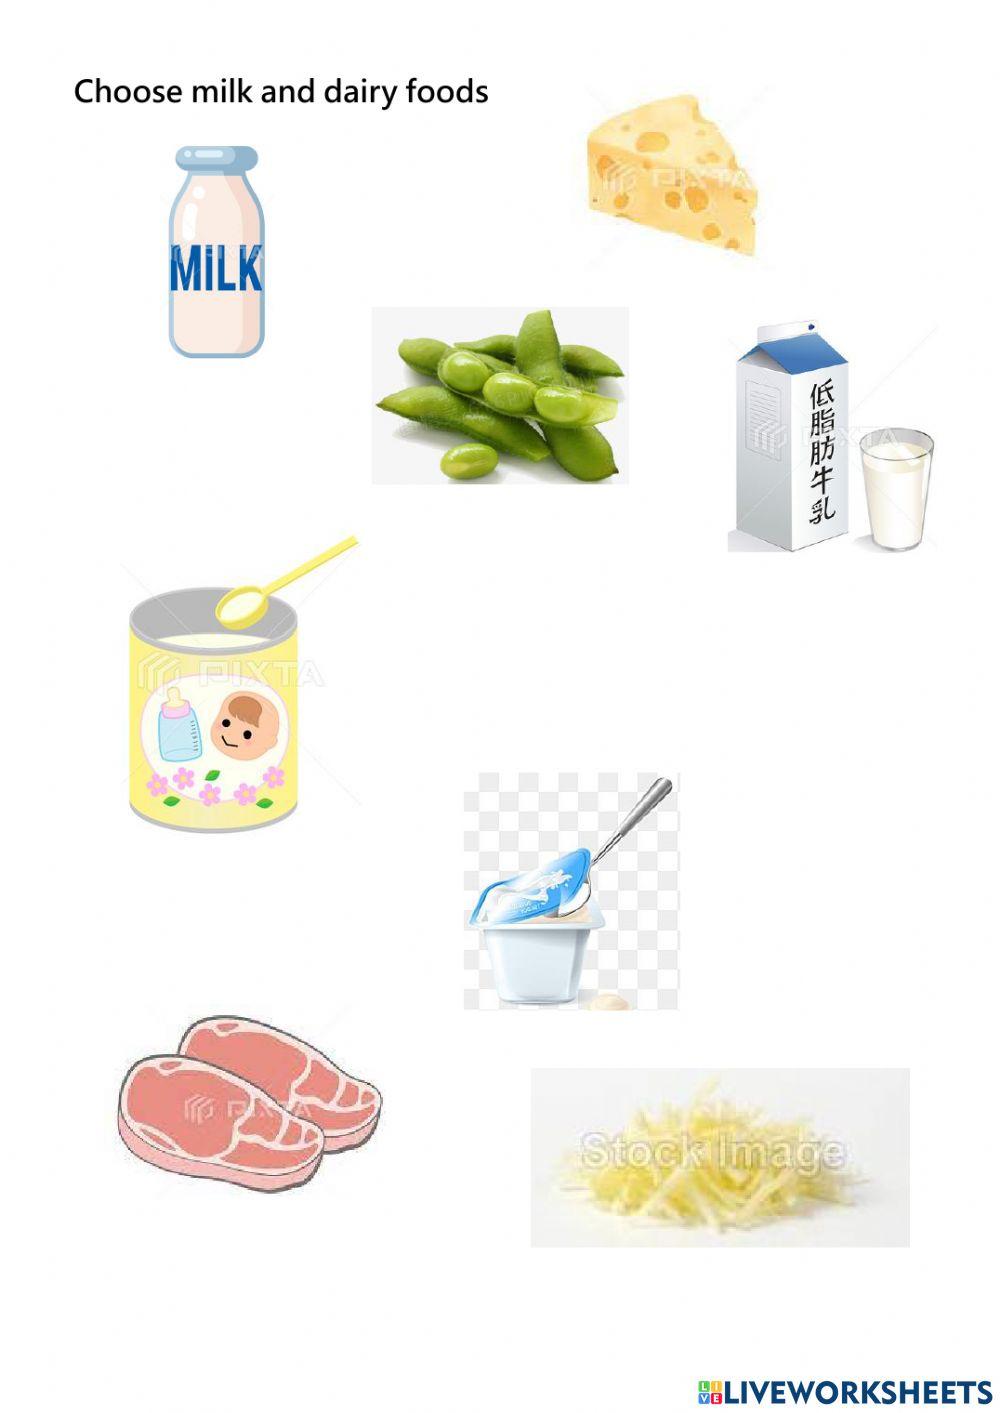 Choose milk and dairy foods